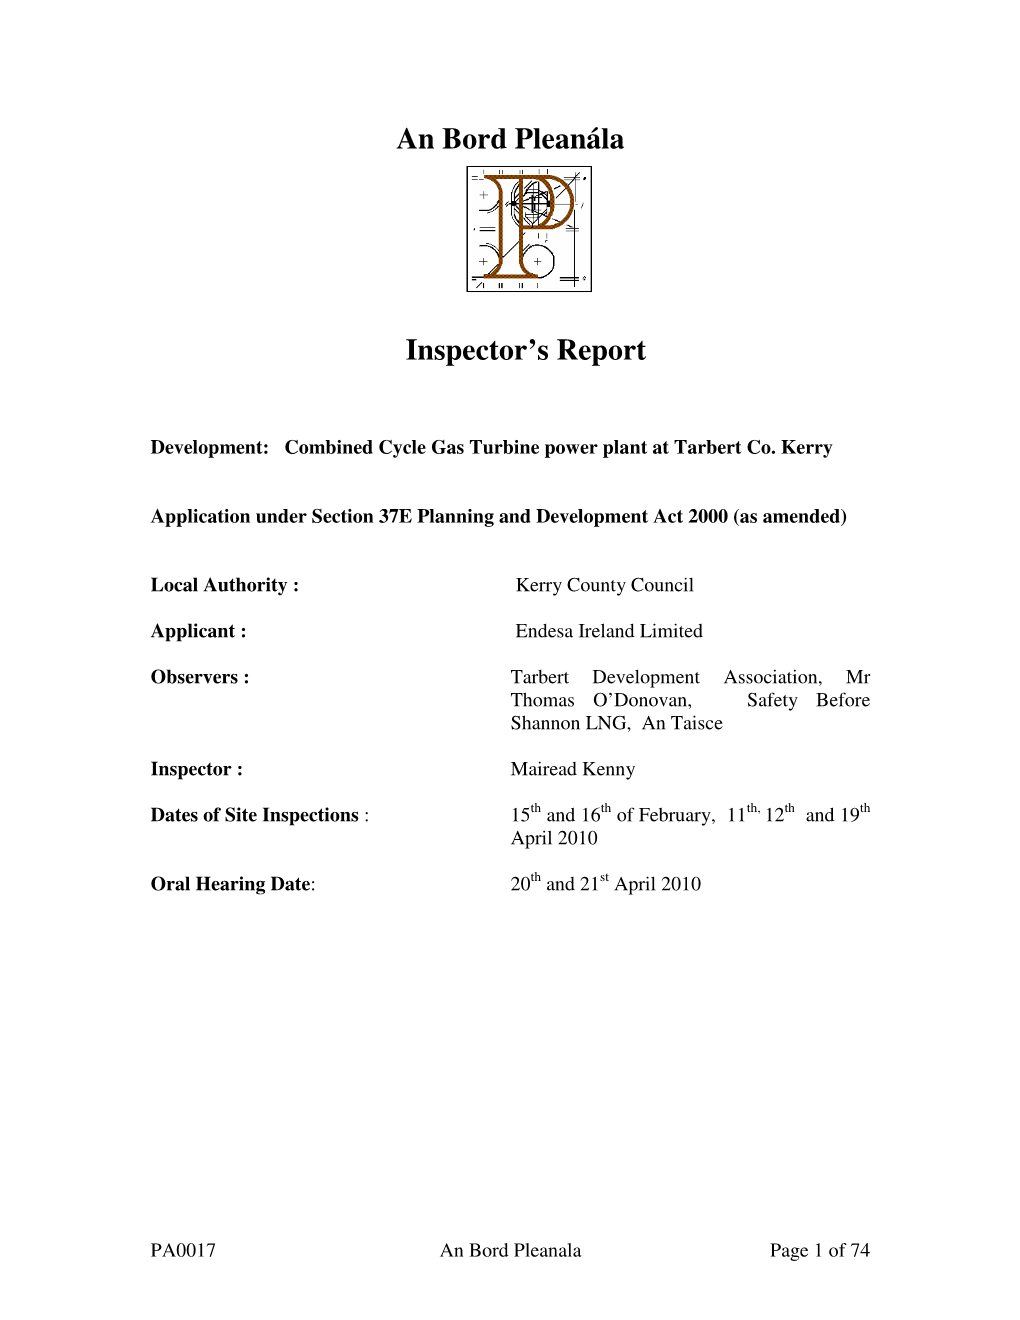 Inspectors Report (PA0/RPA0017.Pdf, PDF Format